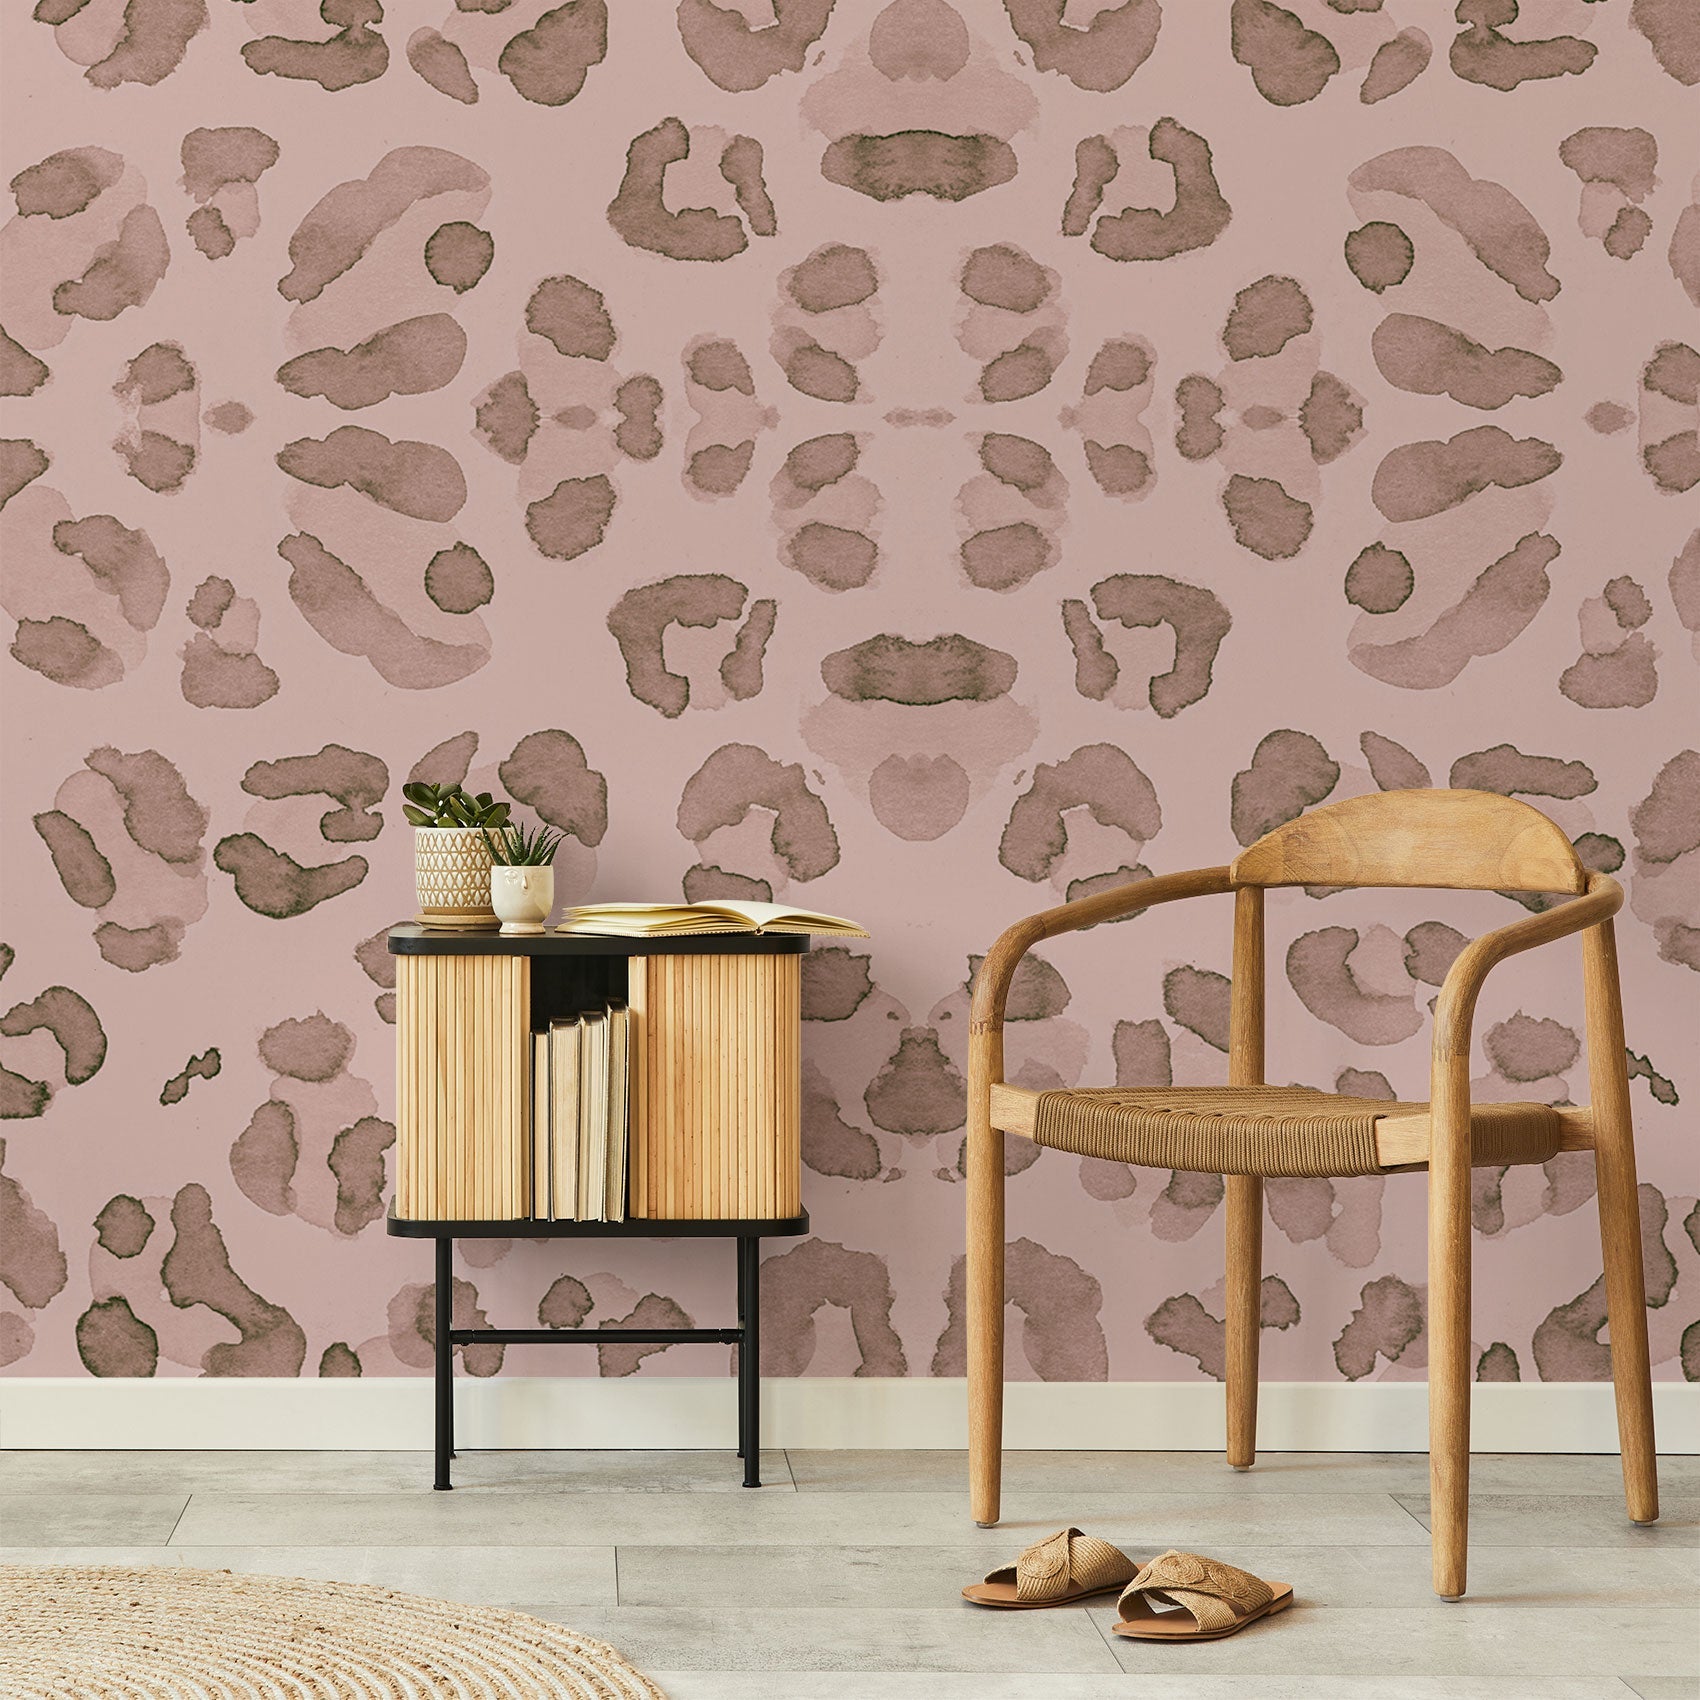 Pink Leopard Print Wallpaper Mural